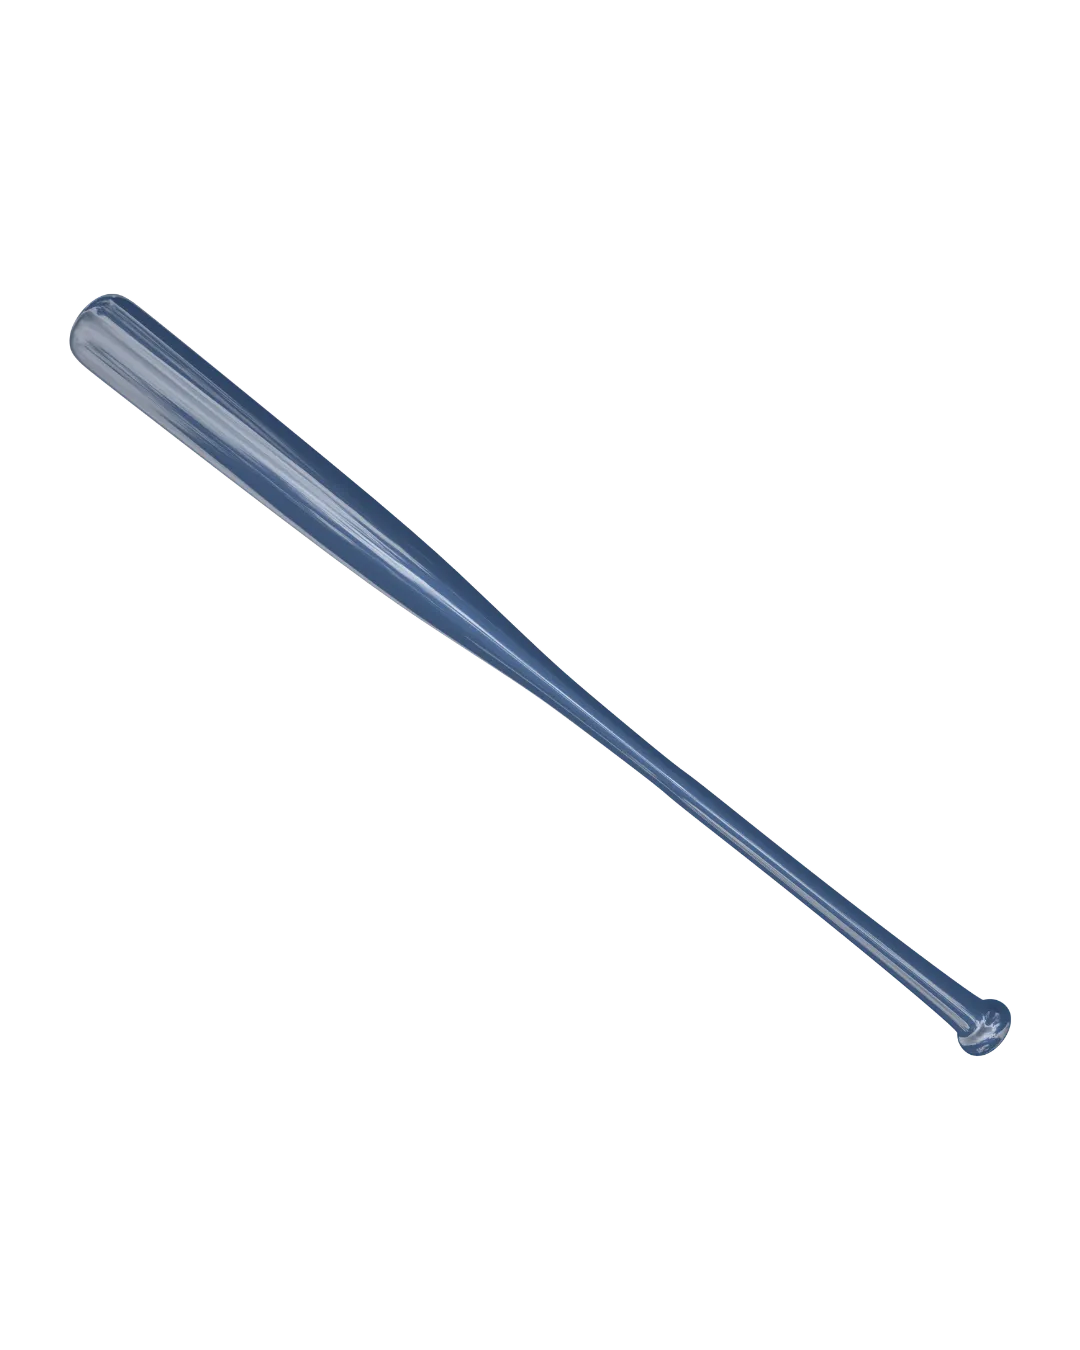 A metal baseball bat